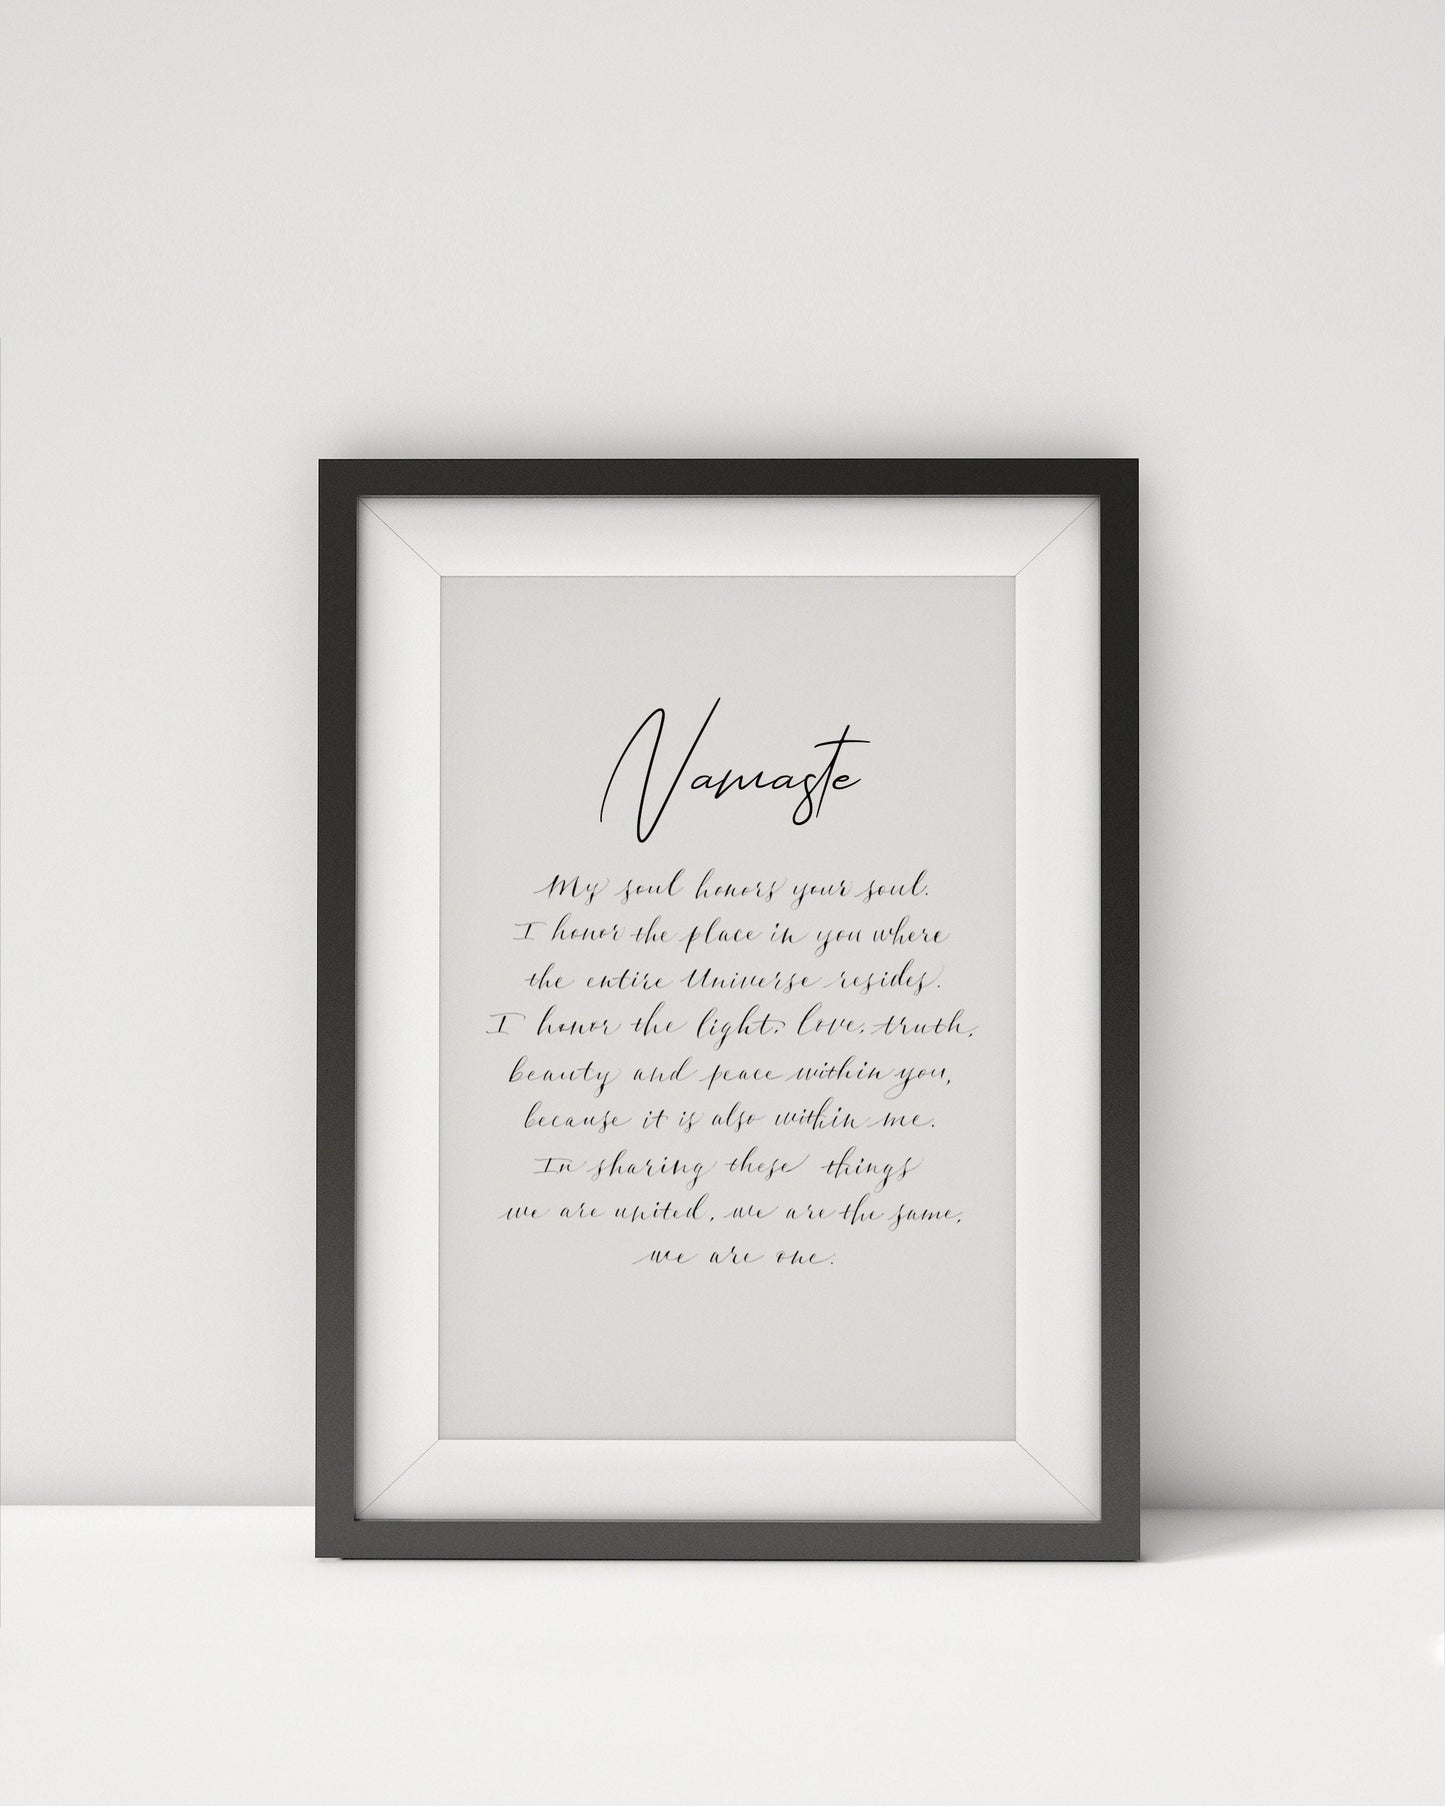 Namaste Print Framed, Yoga Print, Spiritual Artwork - Namaste Modern Calligraphy Quote - Framed poster - Typography Print